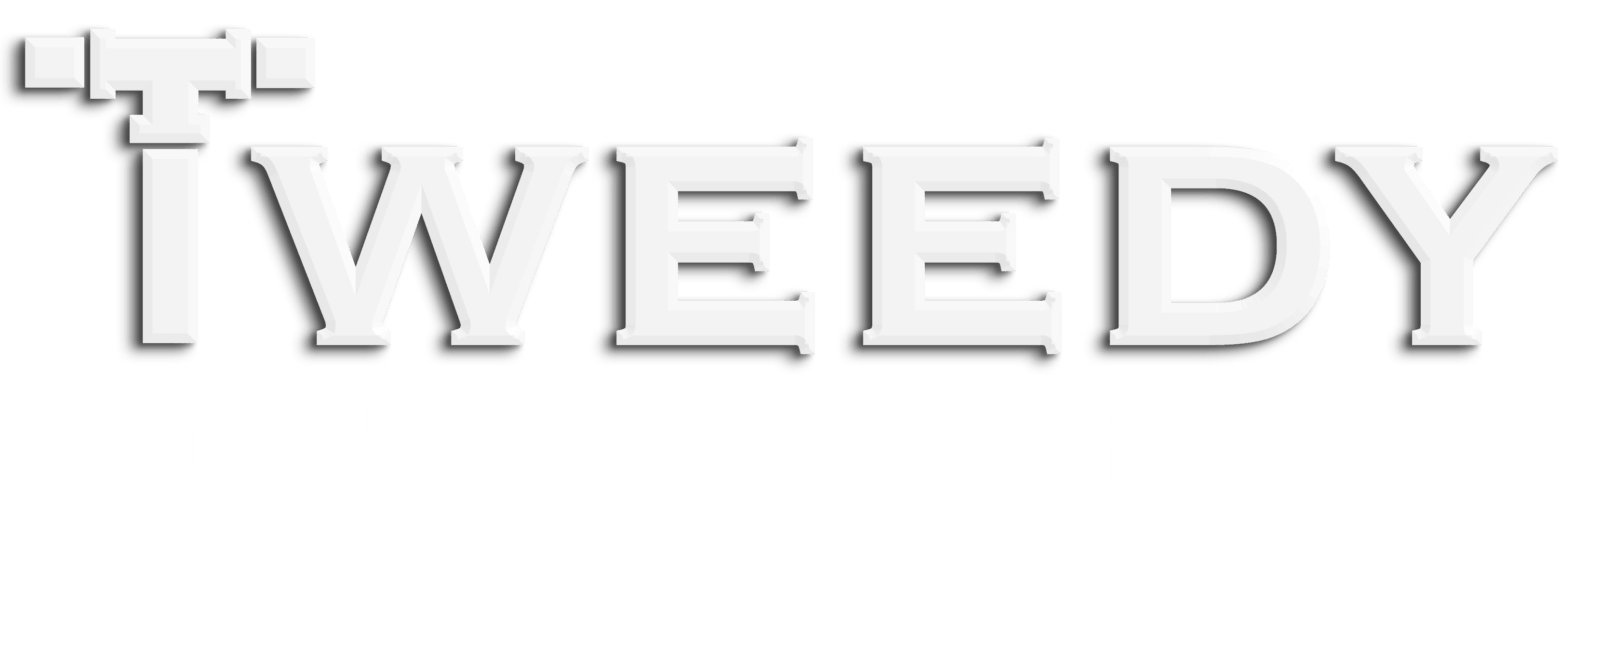 Tweedy Plumbing and Restoration